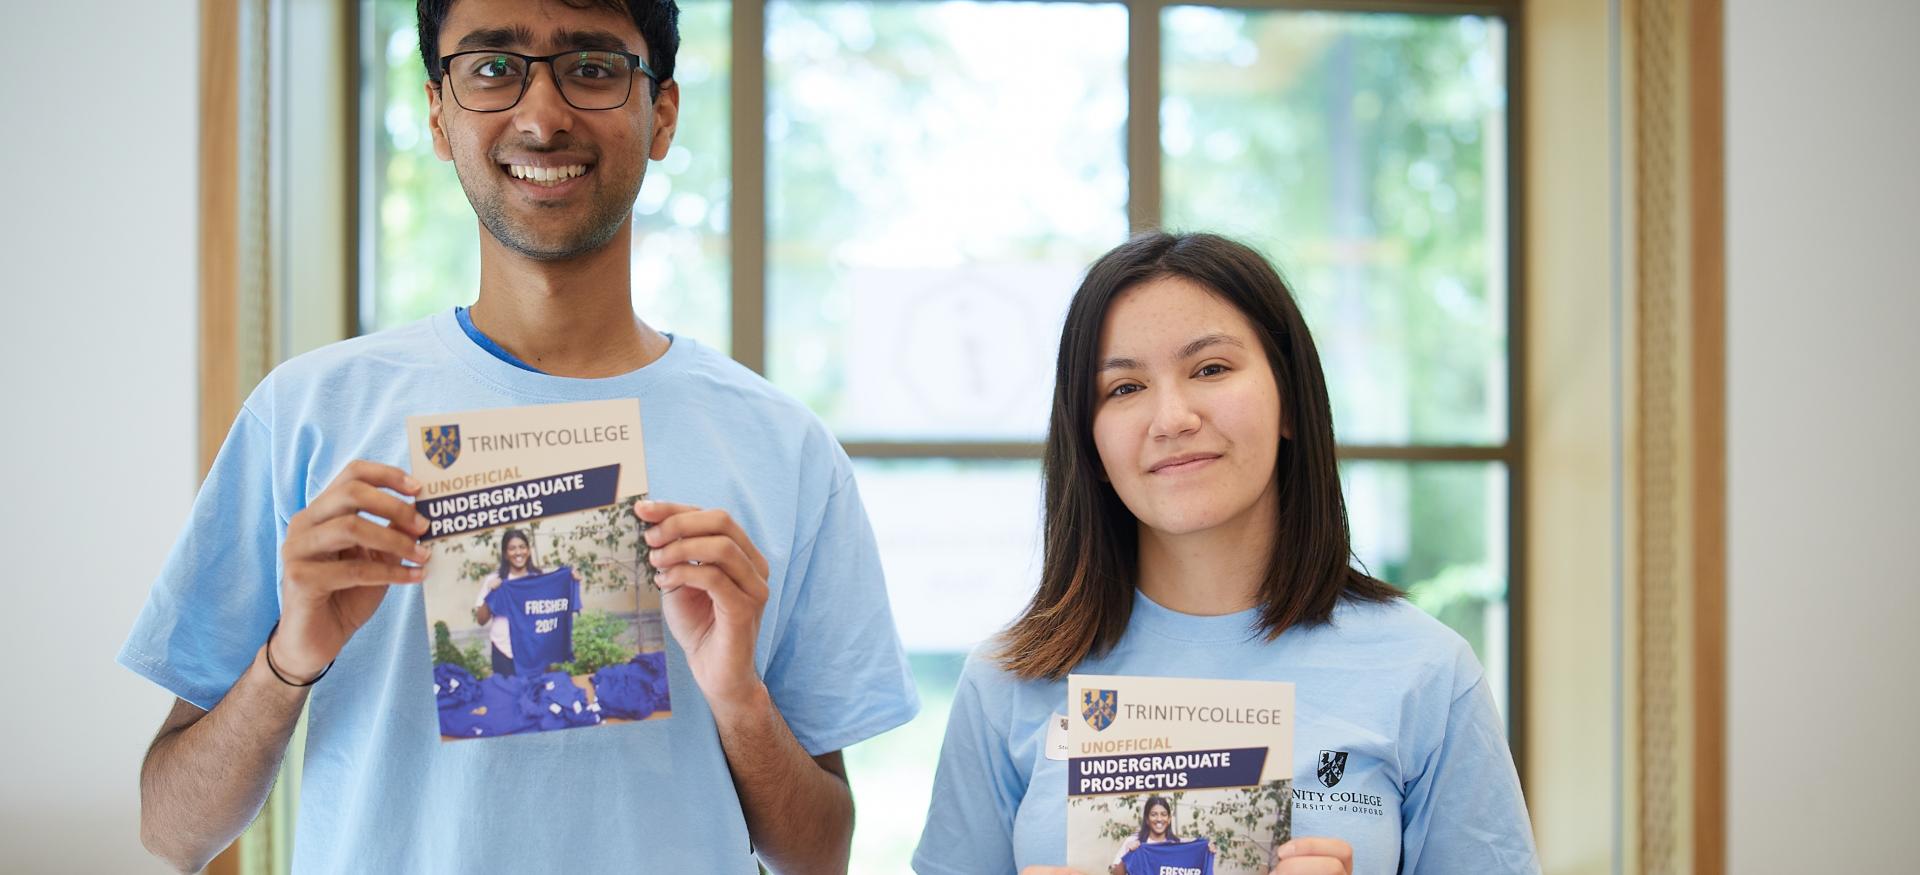 Two Trinity student ambassadors in matching blue shirts hold up undergraduate prospectuses.